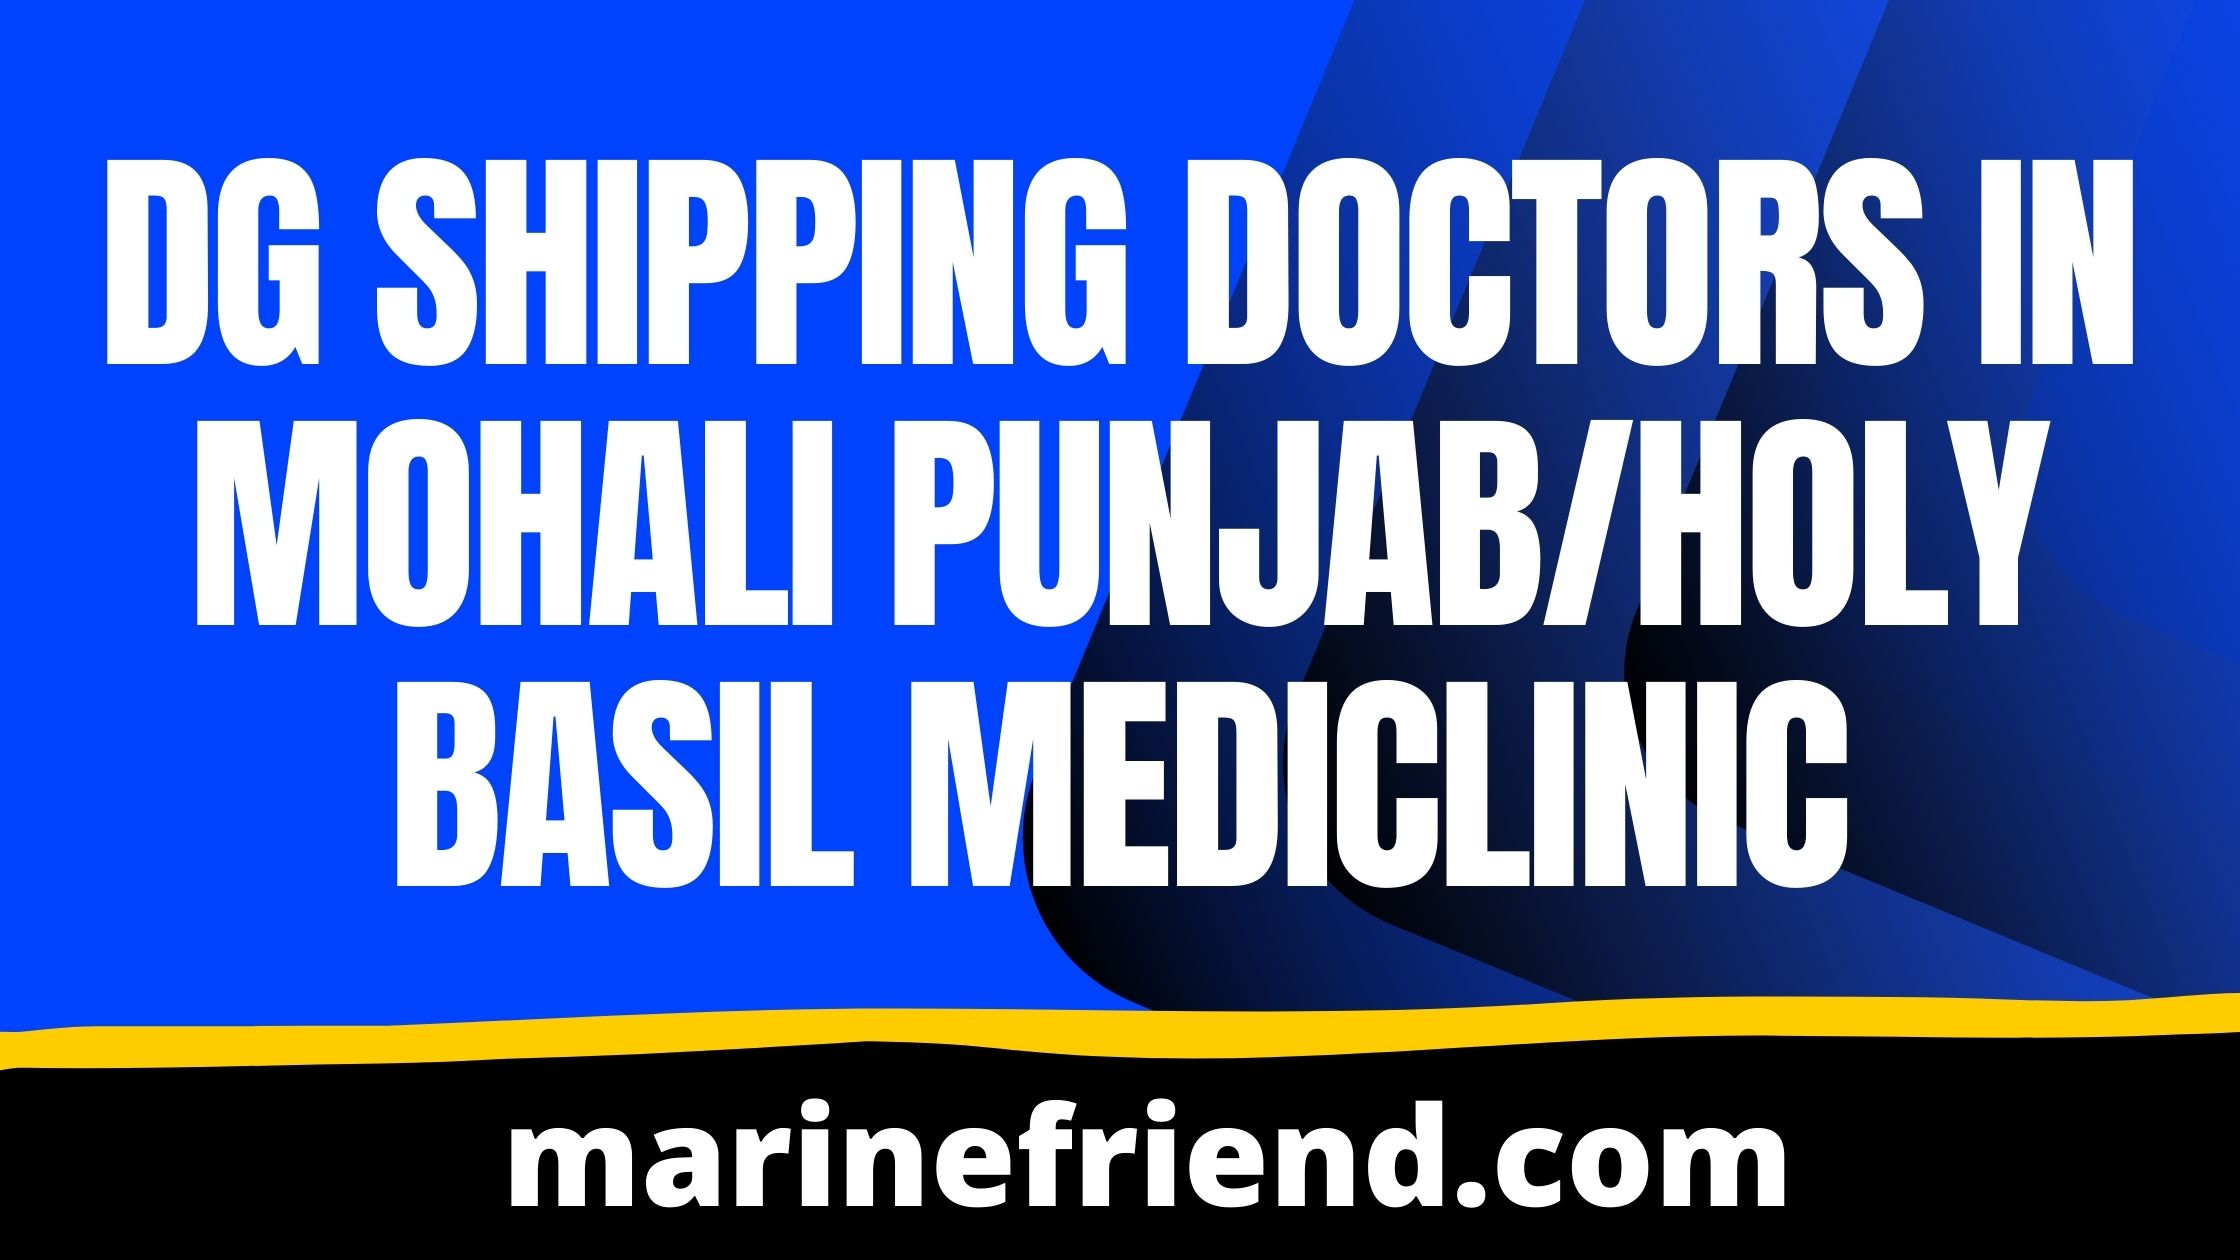 Dg shipping doctors in mohali punjab/holy basil mediclinic